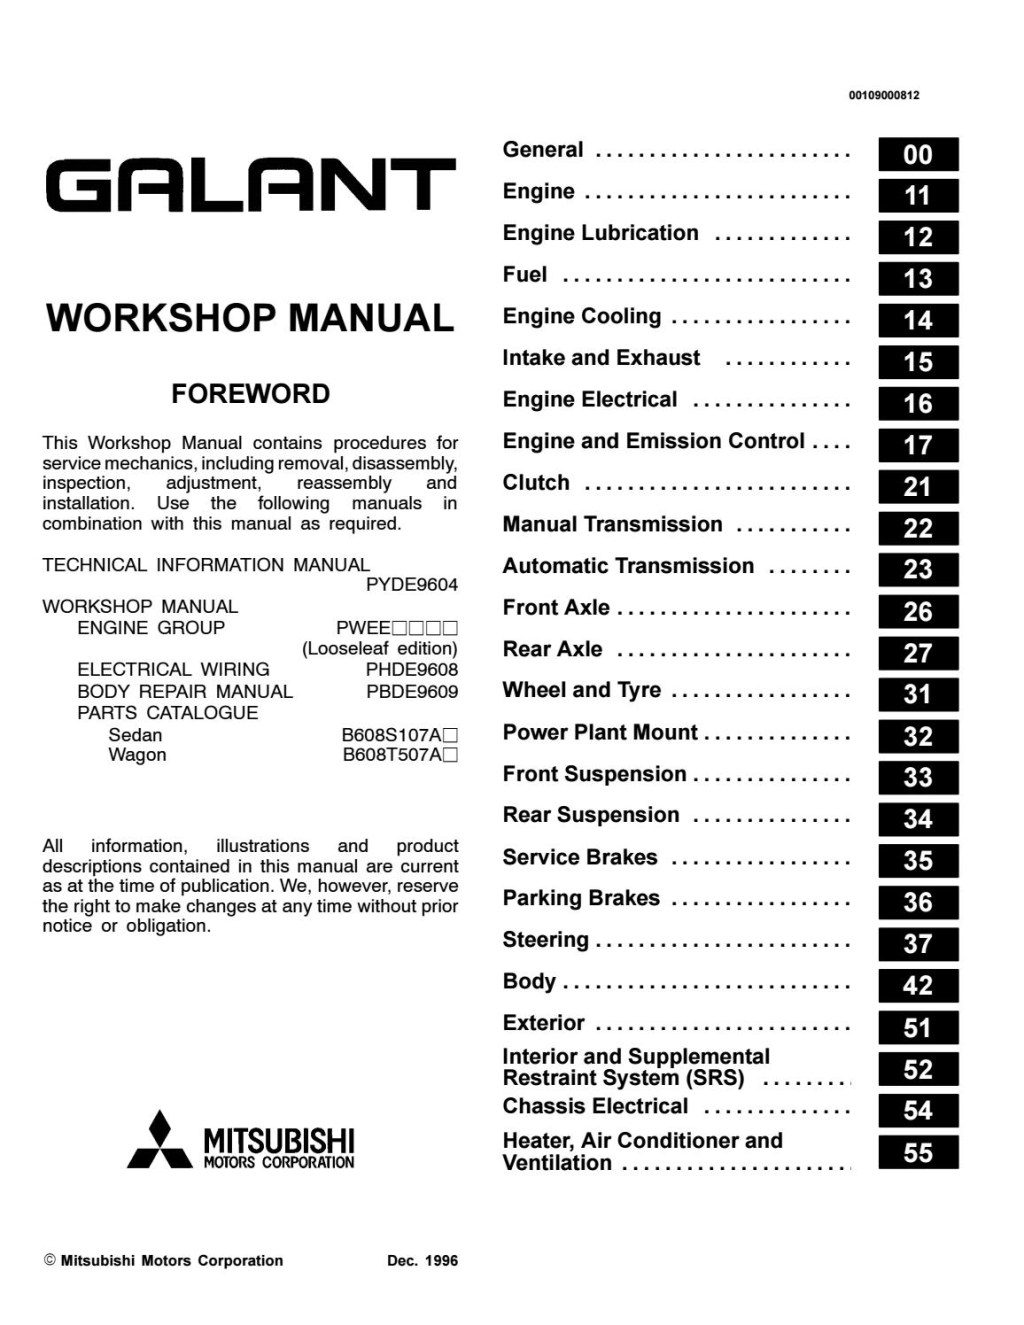 2010 mitsubishi galant owners manual pdf - Mitsubishi Galant Service Repair Manual by gu - Issuu